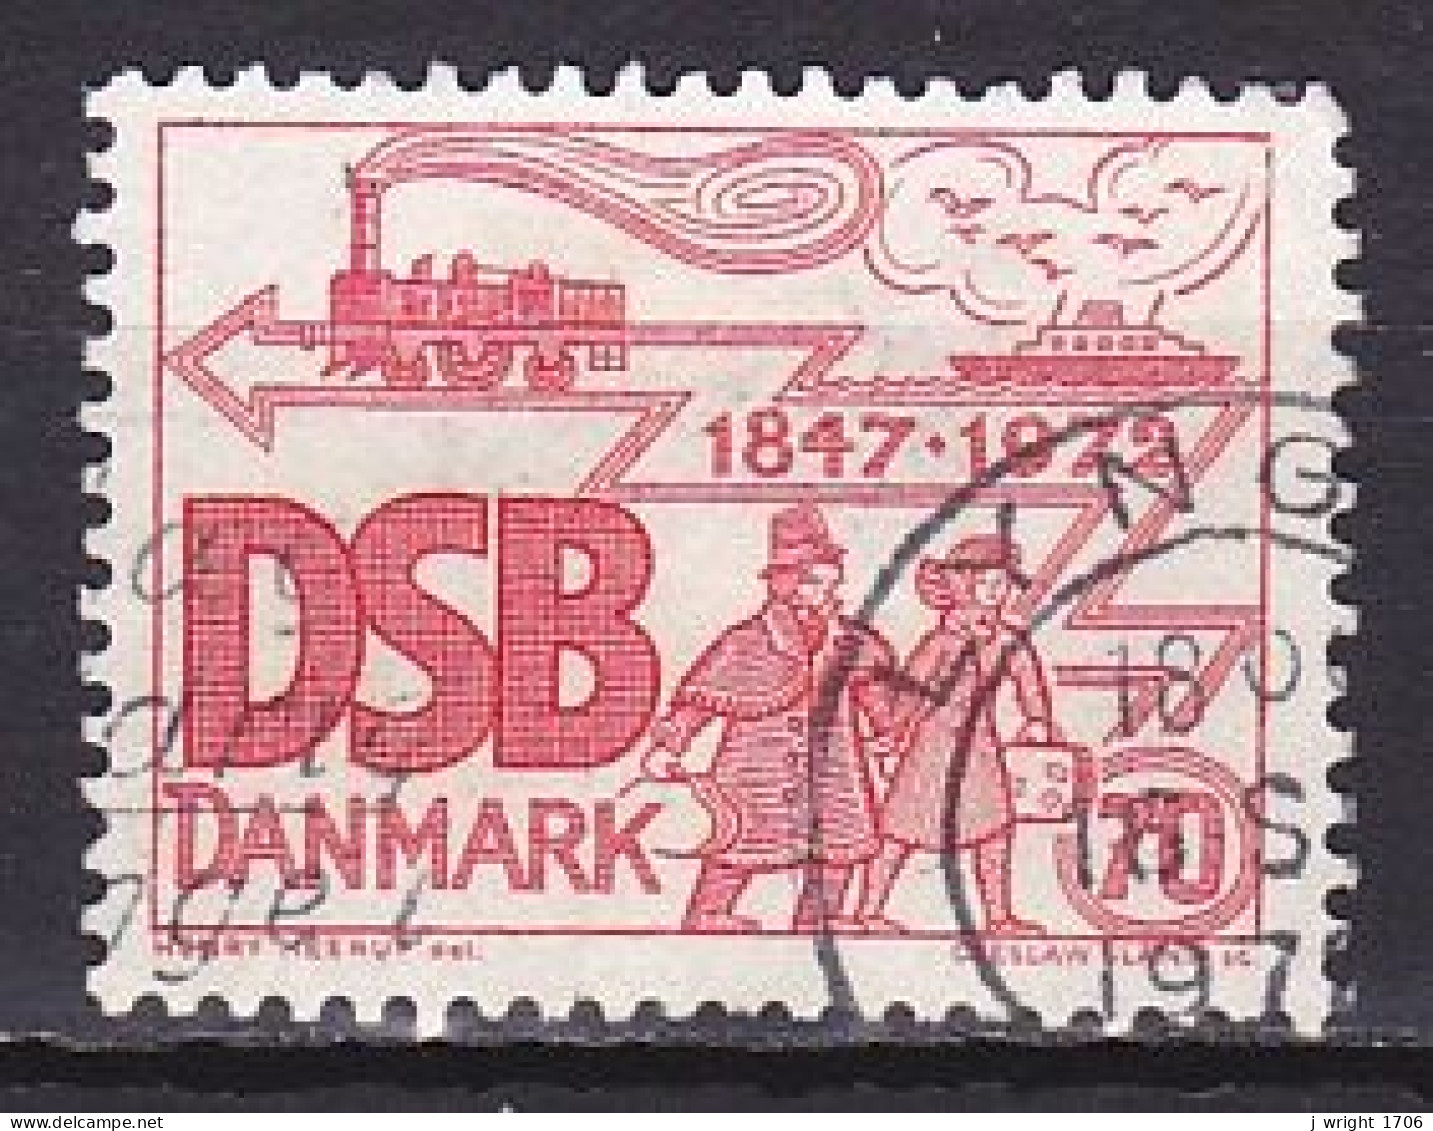 Denmark, 1972, Danish State Railways 125th Anniv, 70ø, USED - Usado